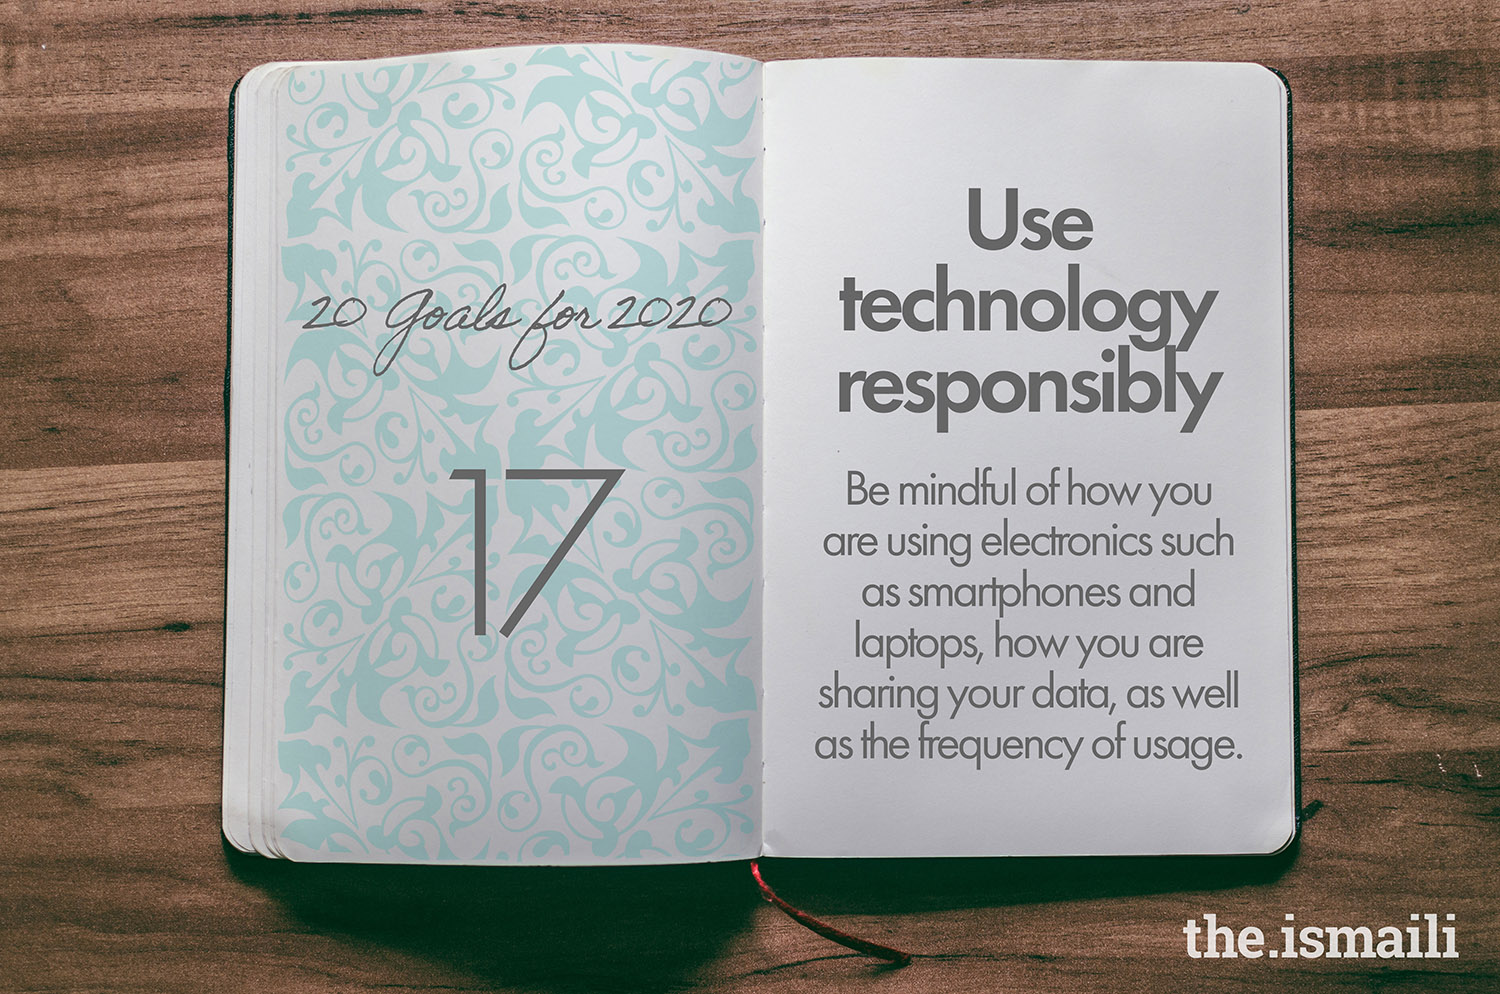 Goal 17: Use technology responsibly